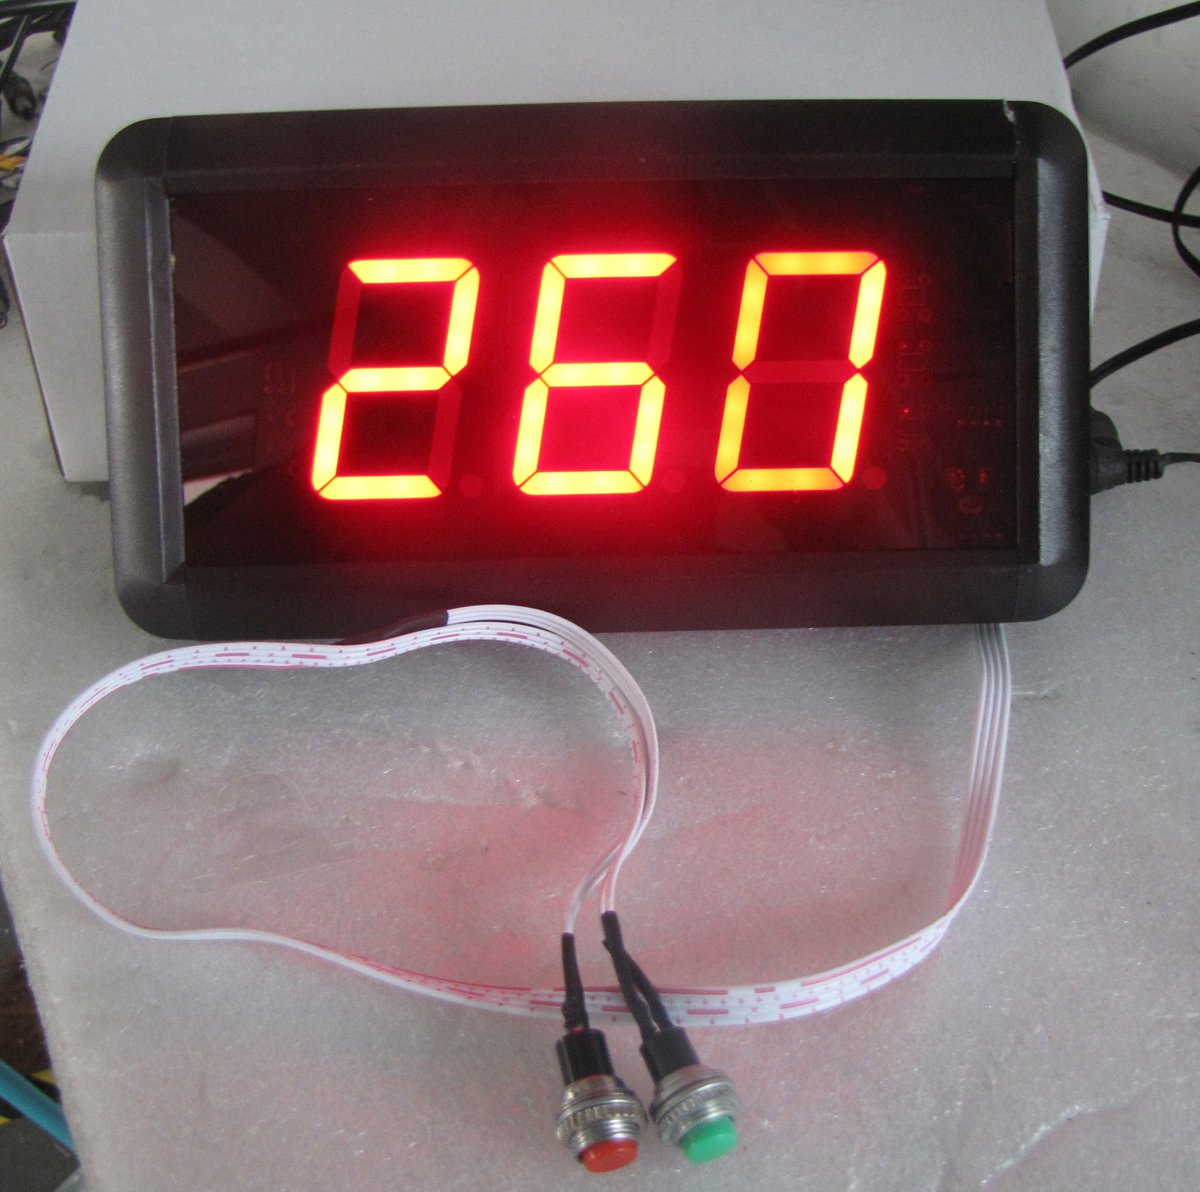 Large LED Countdown Timer: large LED digital wall clock time display